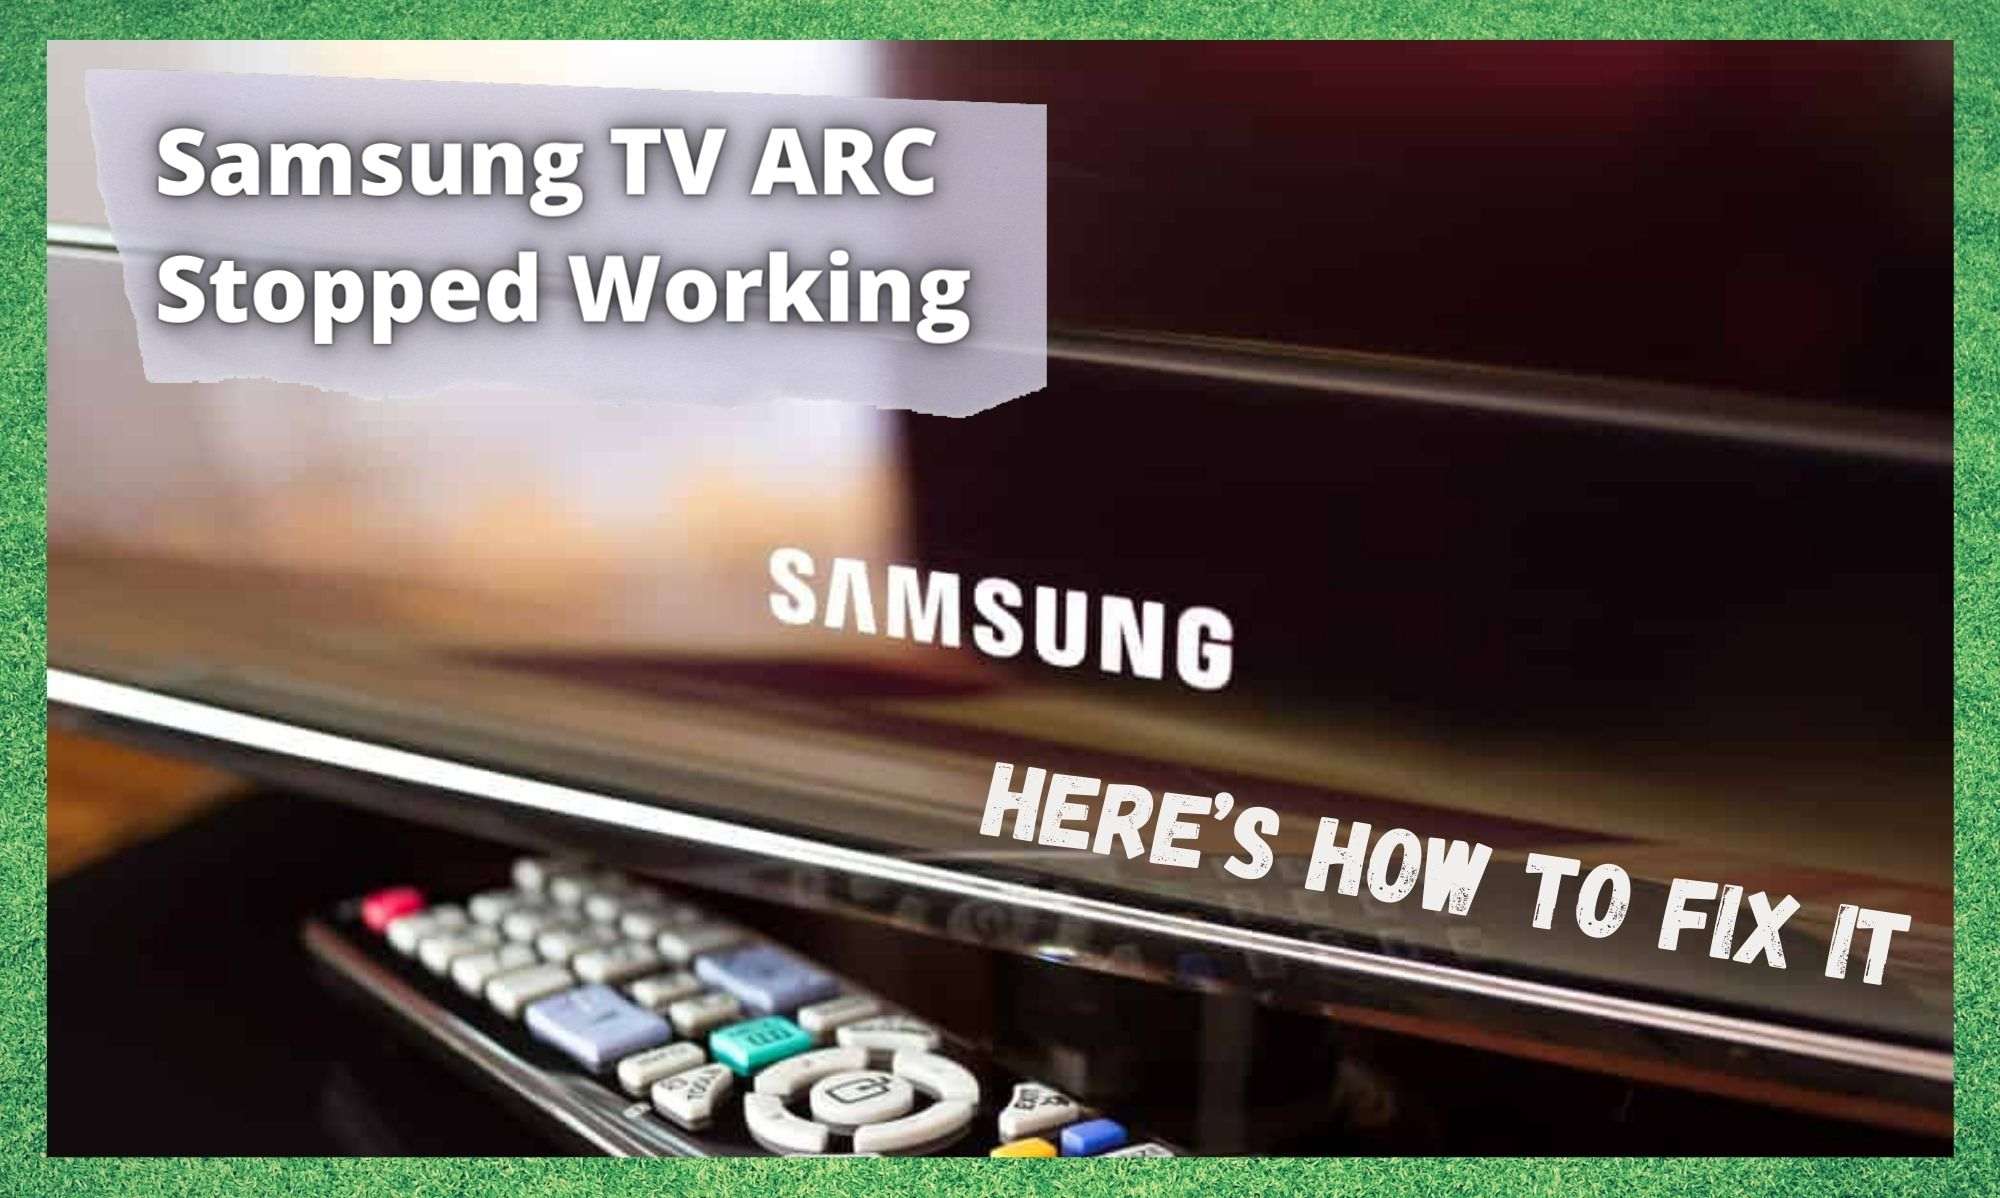 Samsung TV ARC အလုပ်မလုပ်တော့ခြင်း- ပြင်ဆင်ရန် နည်းလမ်း 5 ခု